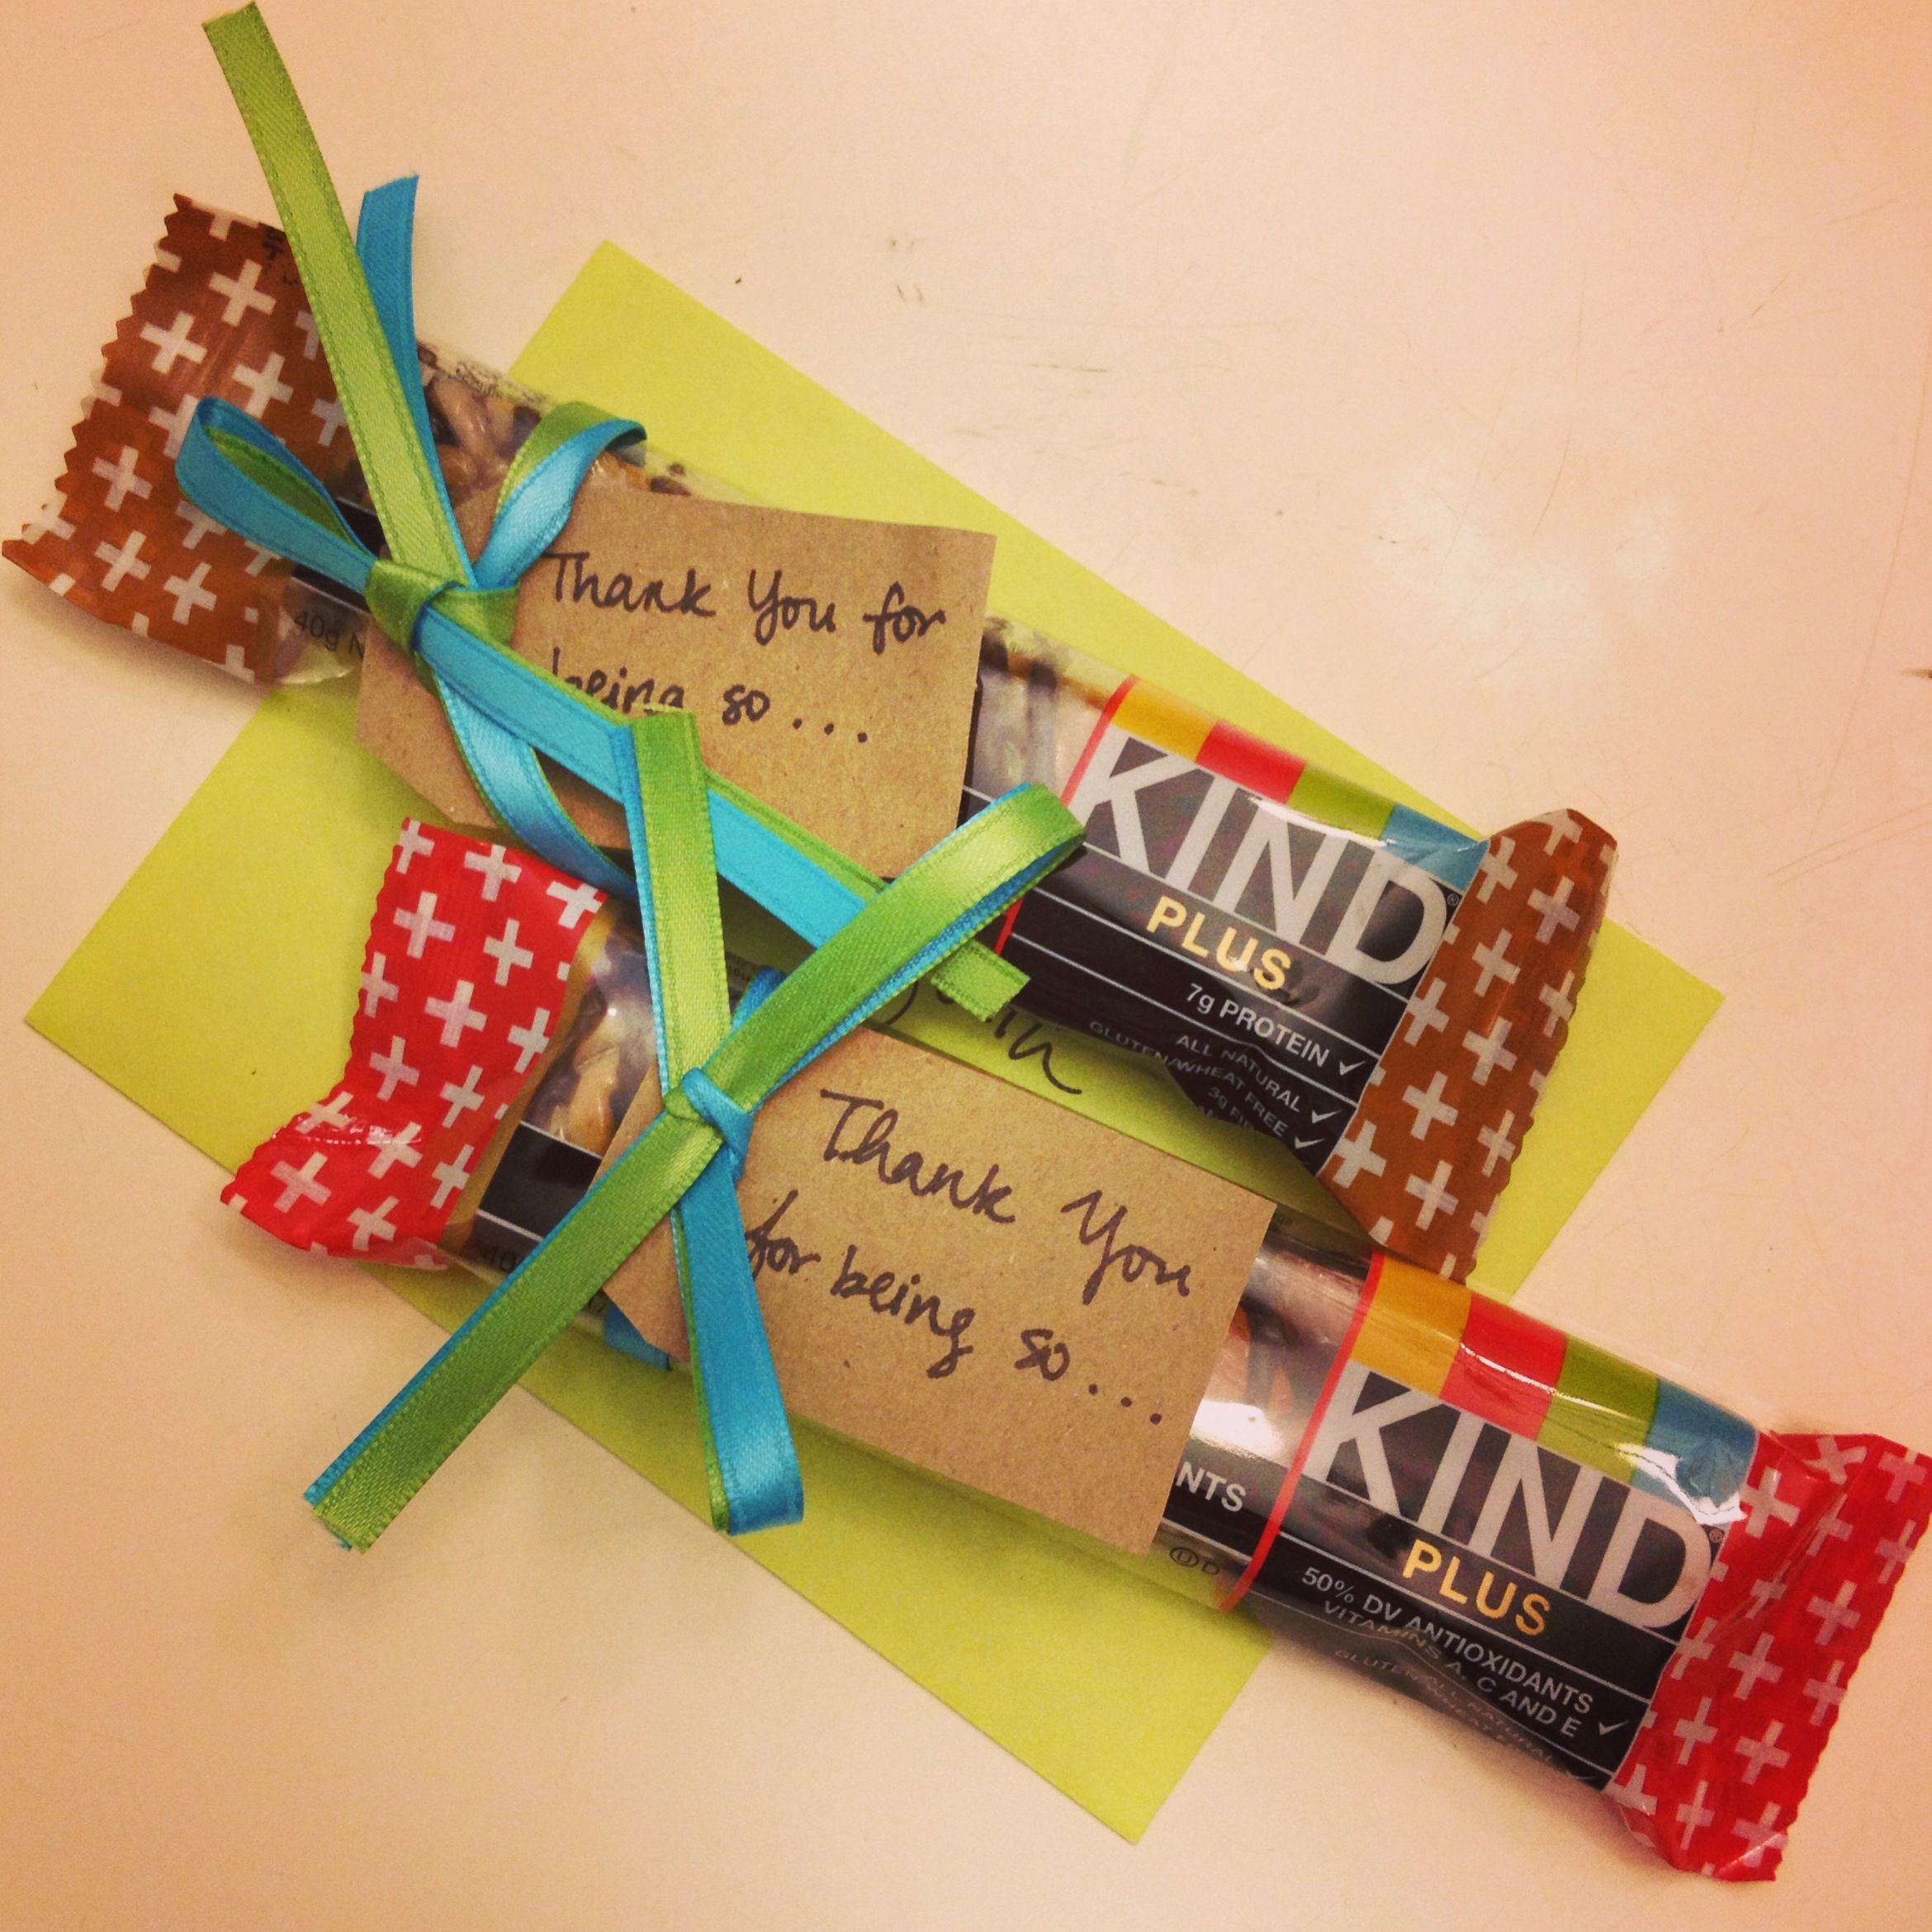 Cute Thank You Gift Ideas
 Cute thank you t idea using KIND bars